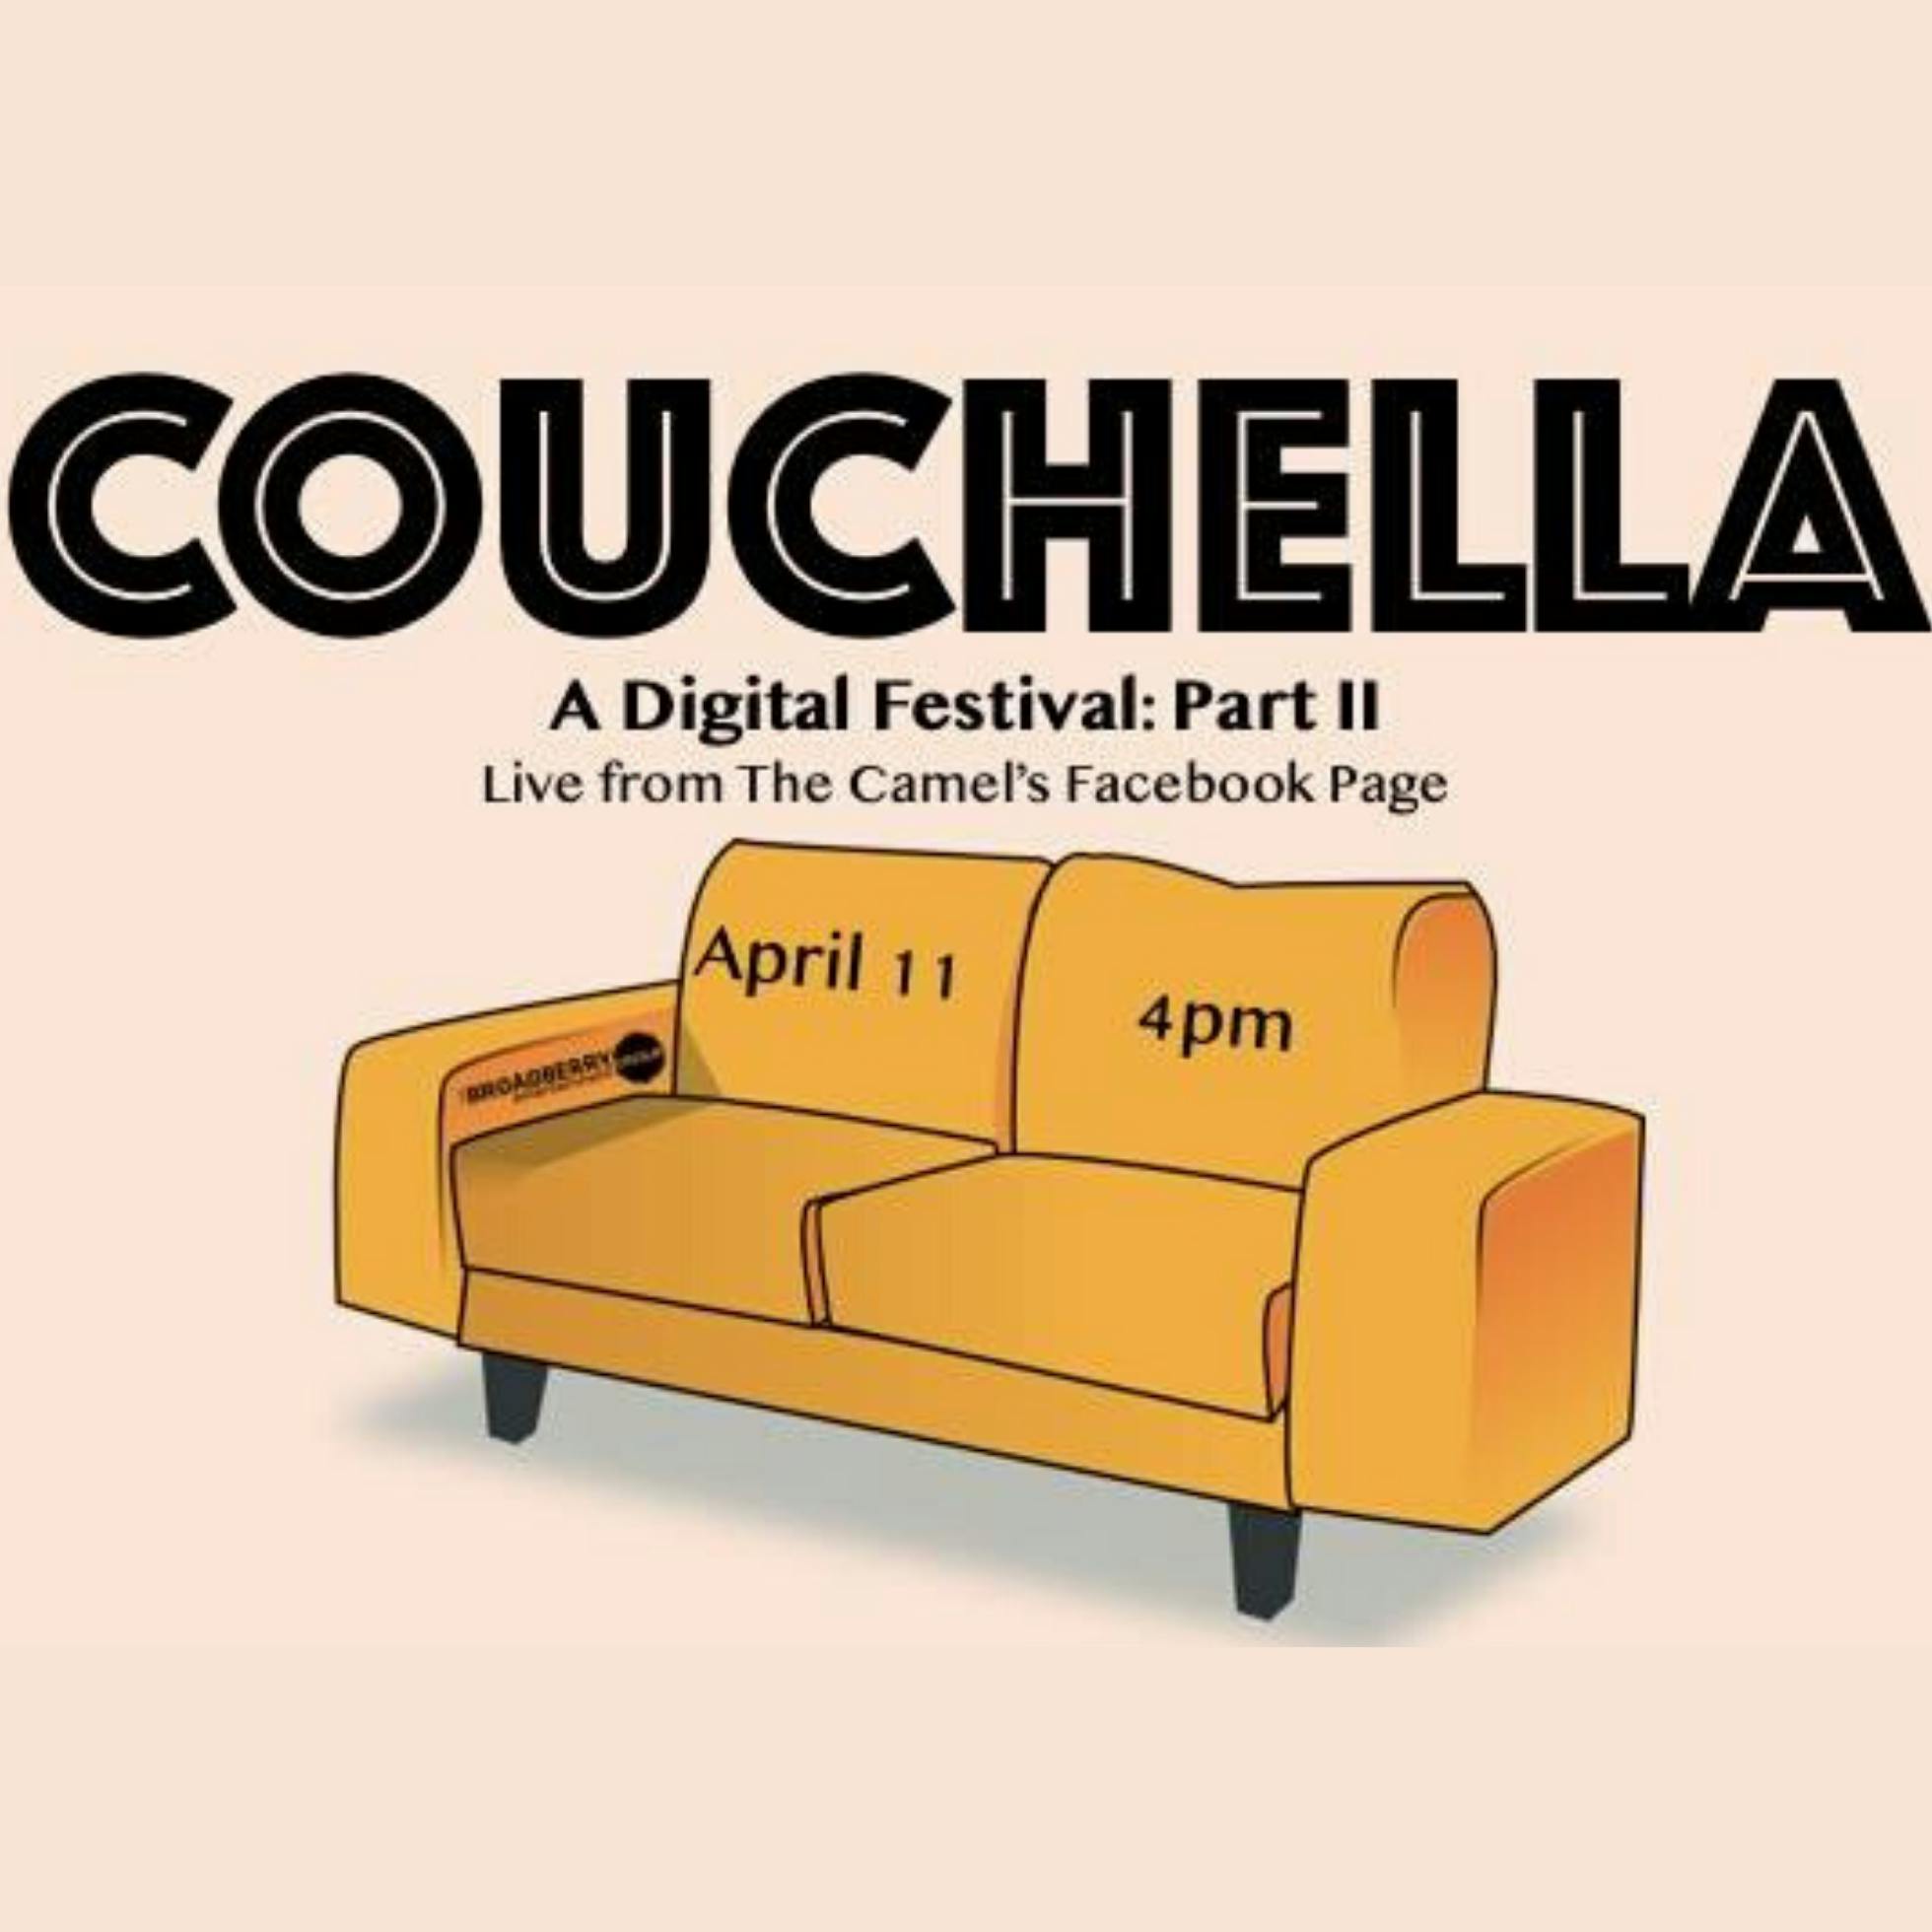 Couchella: A Free Digital Festival